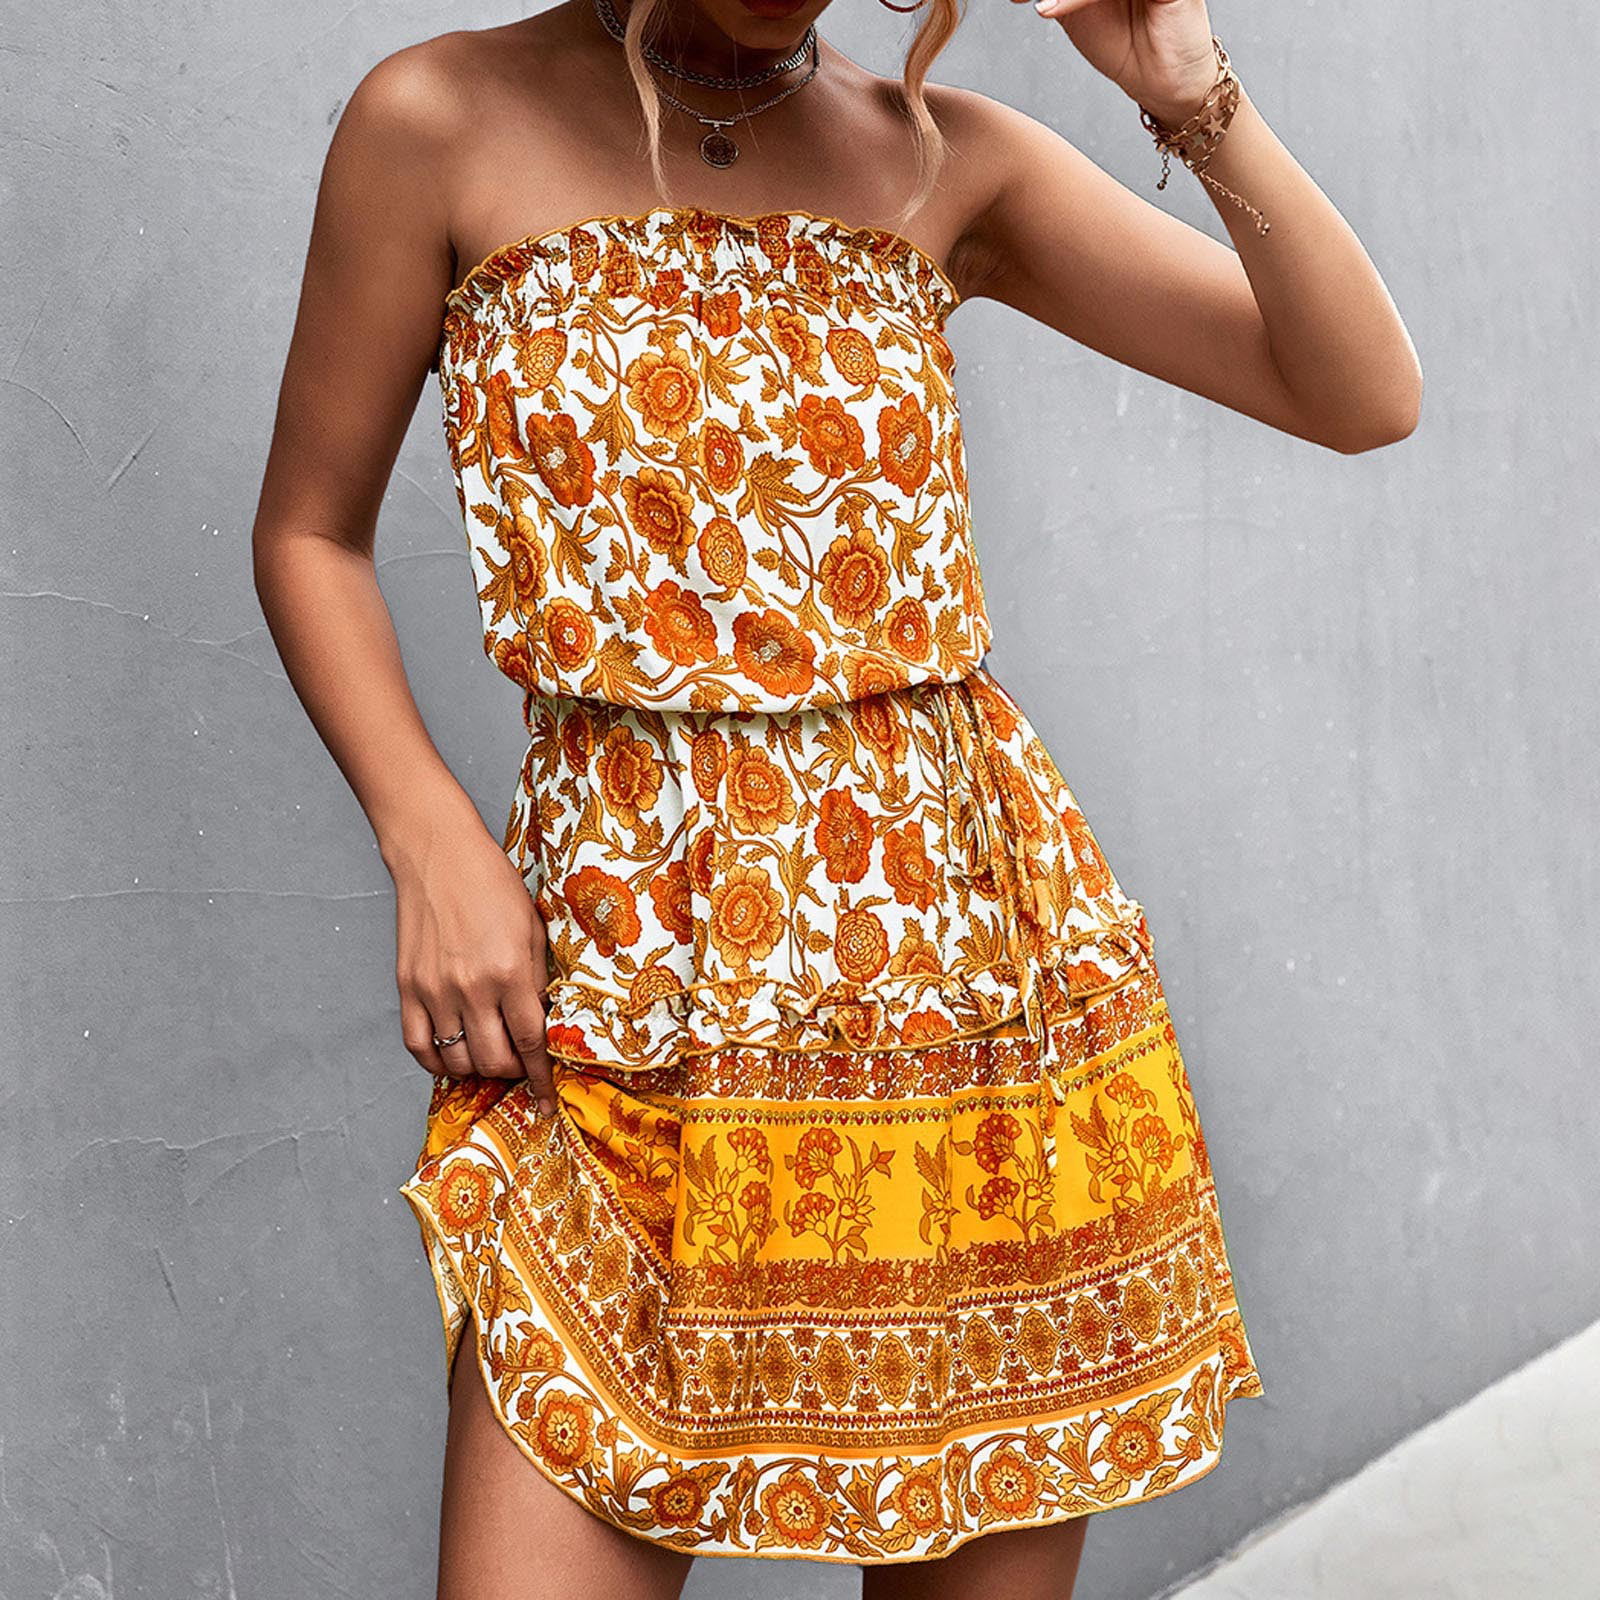 uikmnh Women's Dress Tube Top For Women's Summer Strapless Swing Beach Mini Dress -